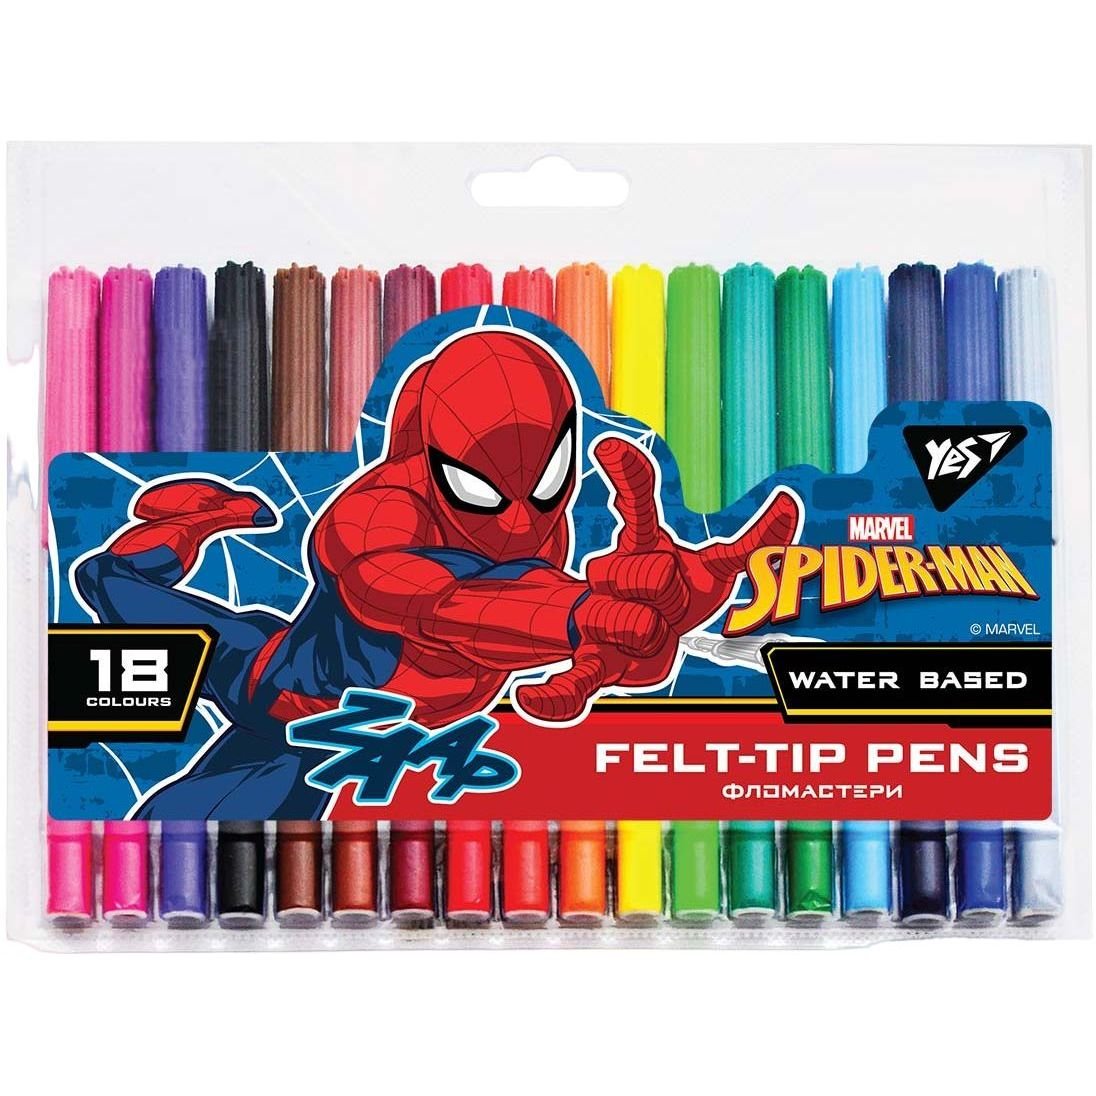 Фломастеры Yes Marvel Spiderman, 18 цветов (650497) - фото 1